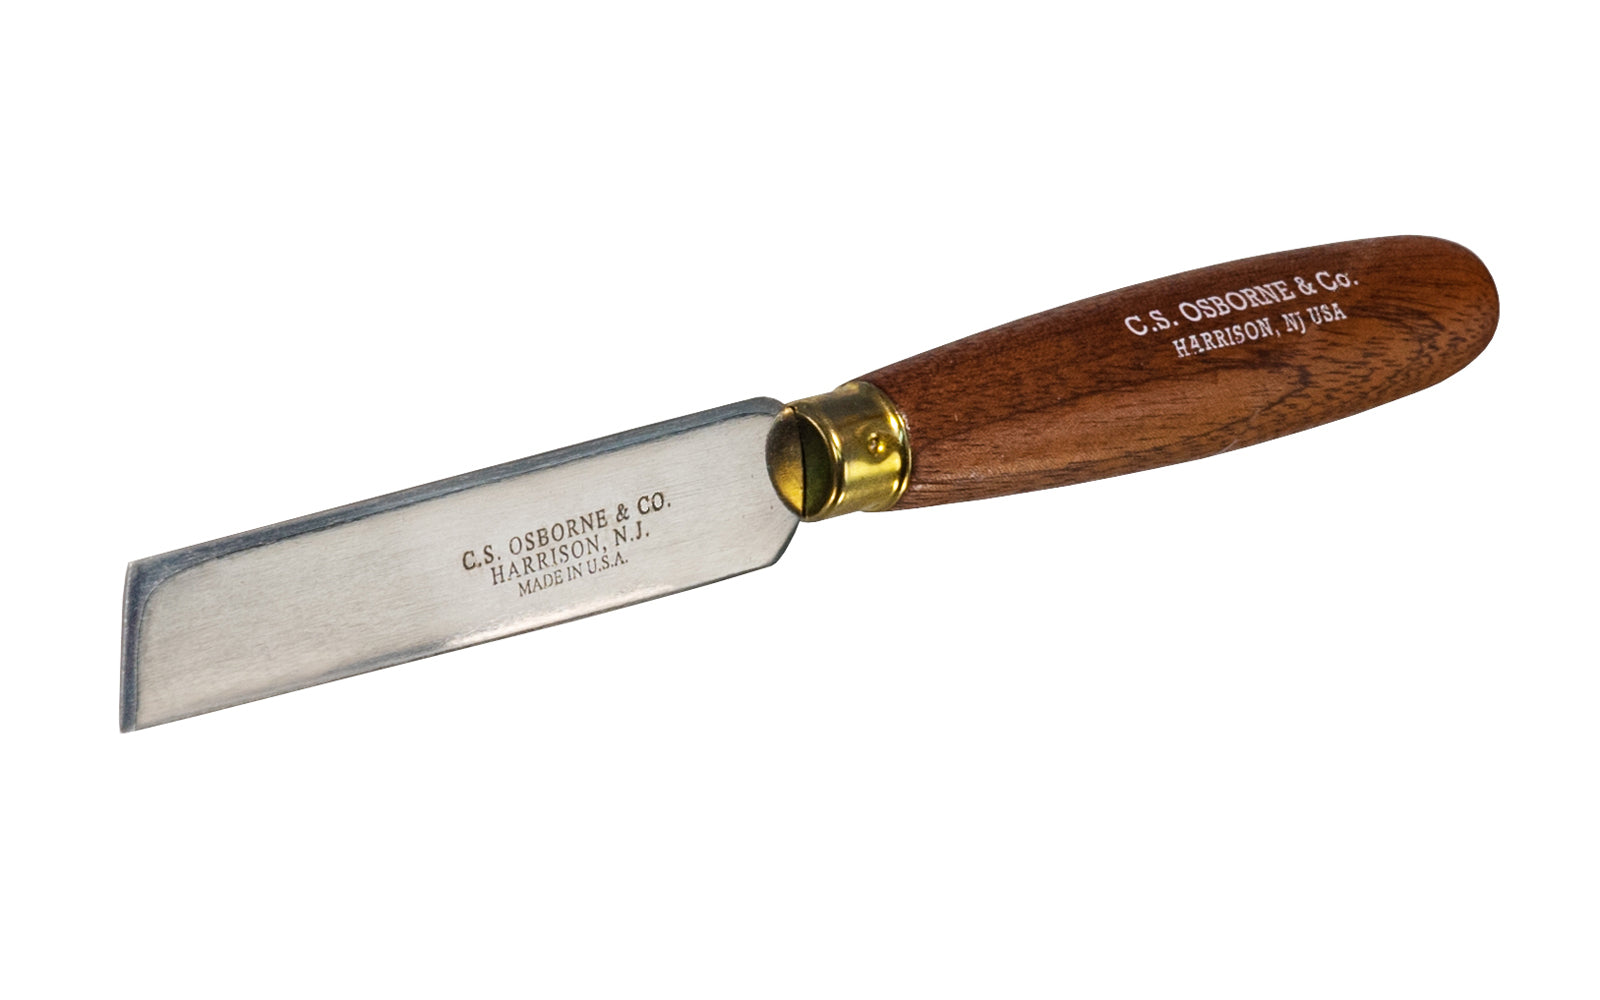 CS Osborne Square Point Knife - 3-3/4" Blade ~ No. 76 - Brass ferrules - Hardwood Handle - Made in USA - Square Blade Knife - Osborne #76 Knife ~ 096685600420